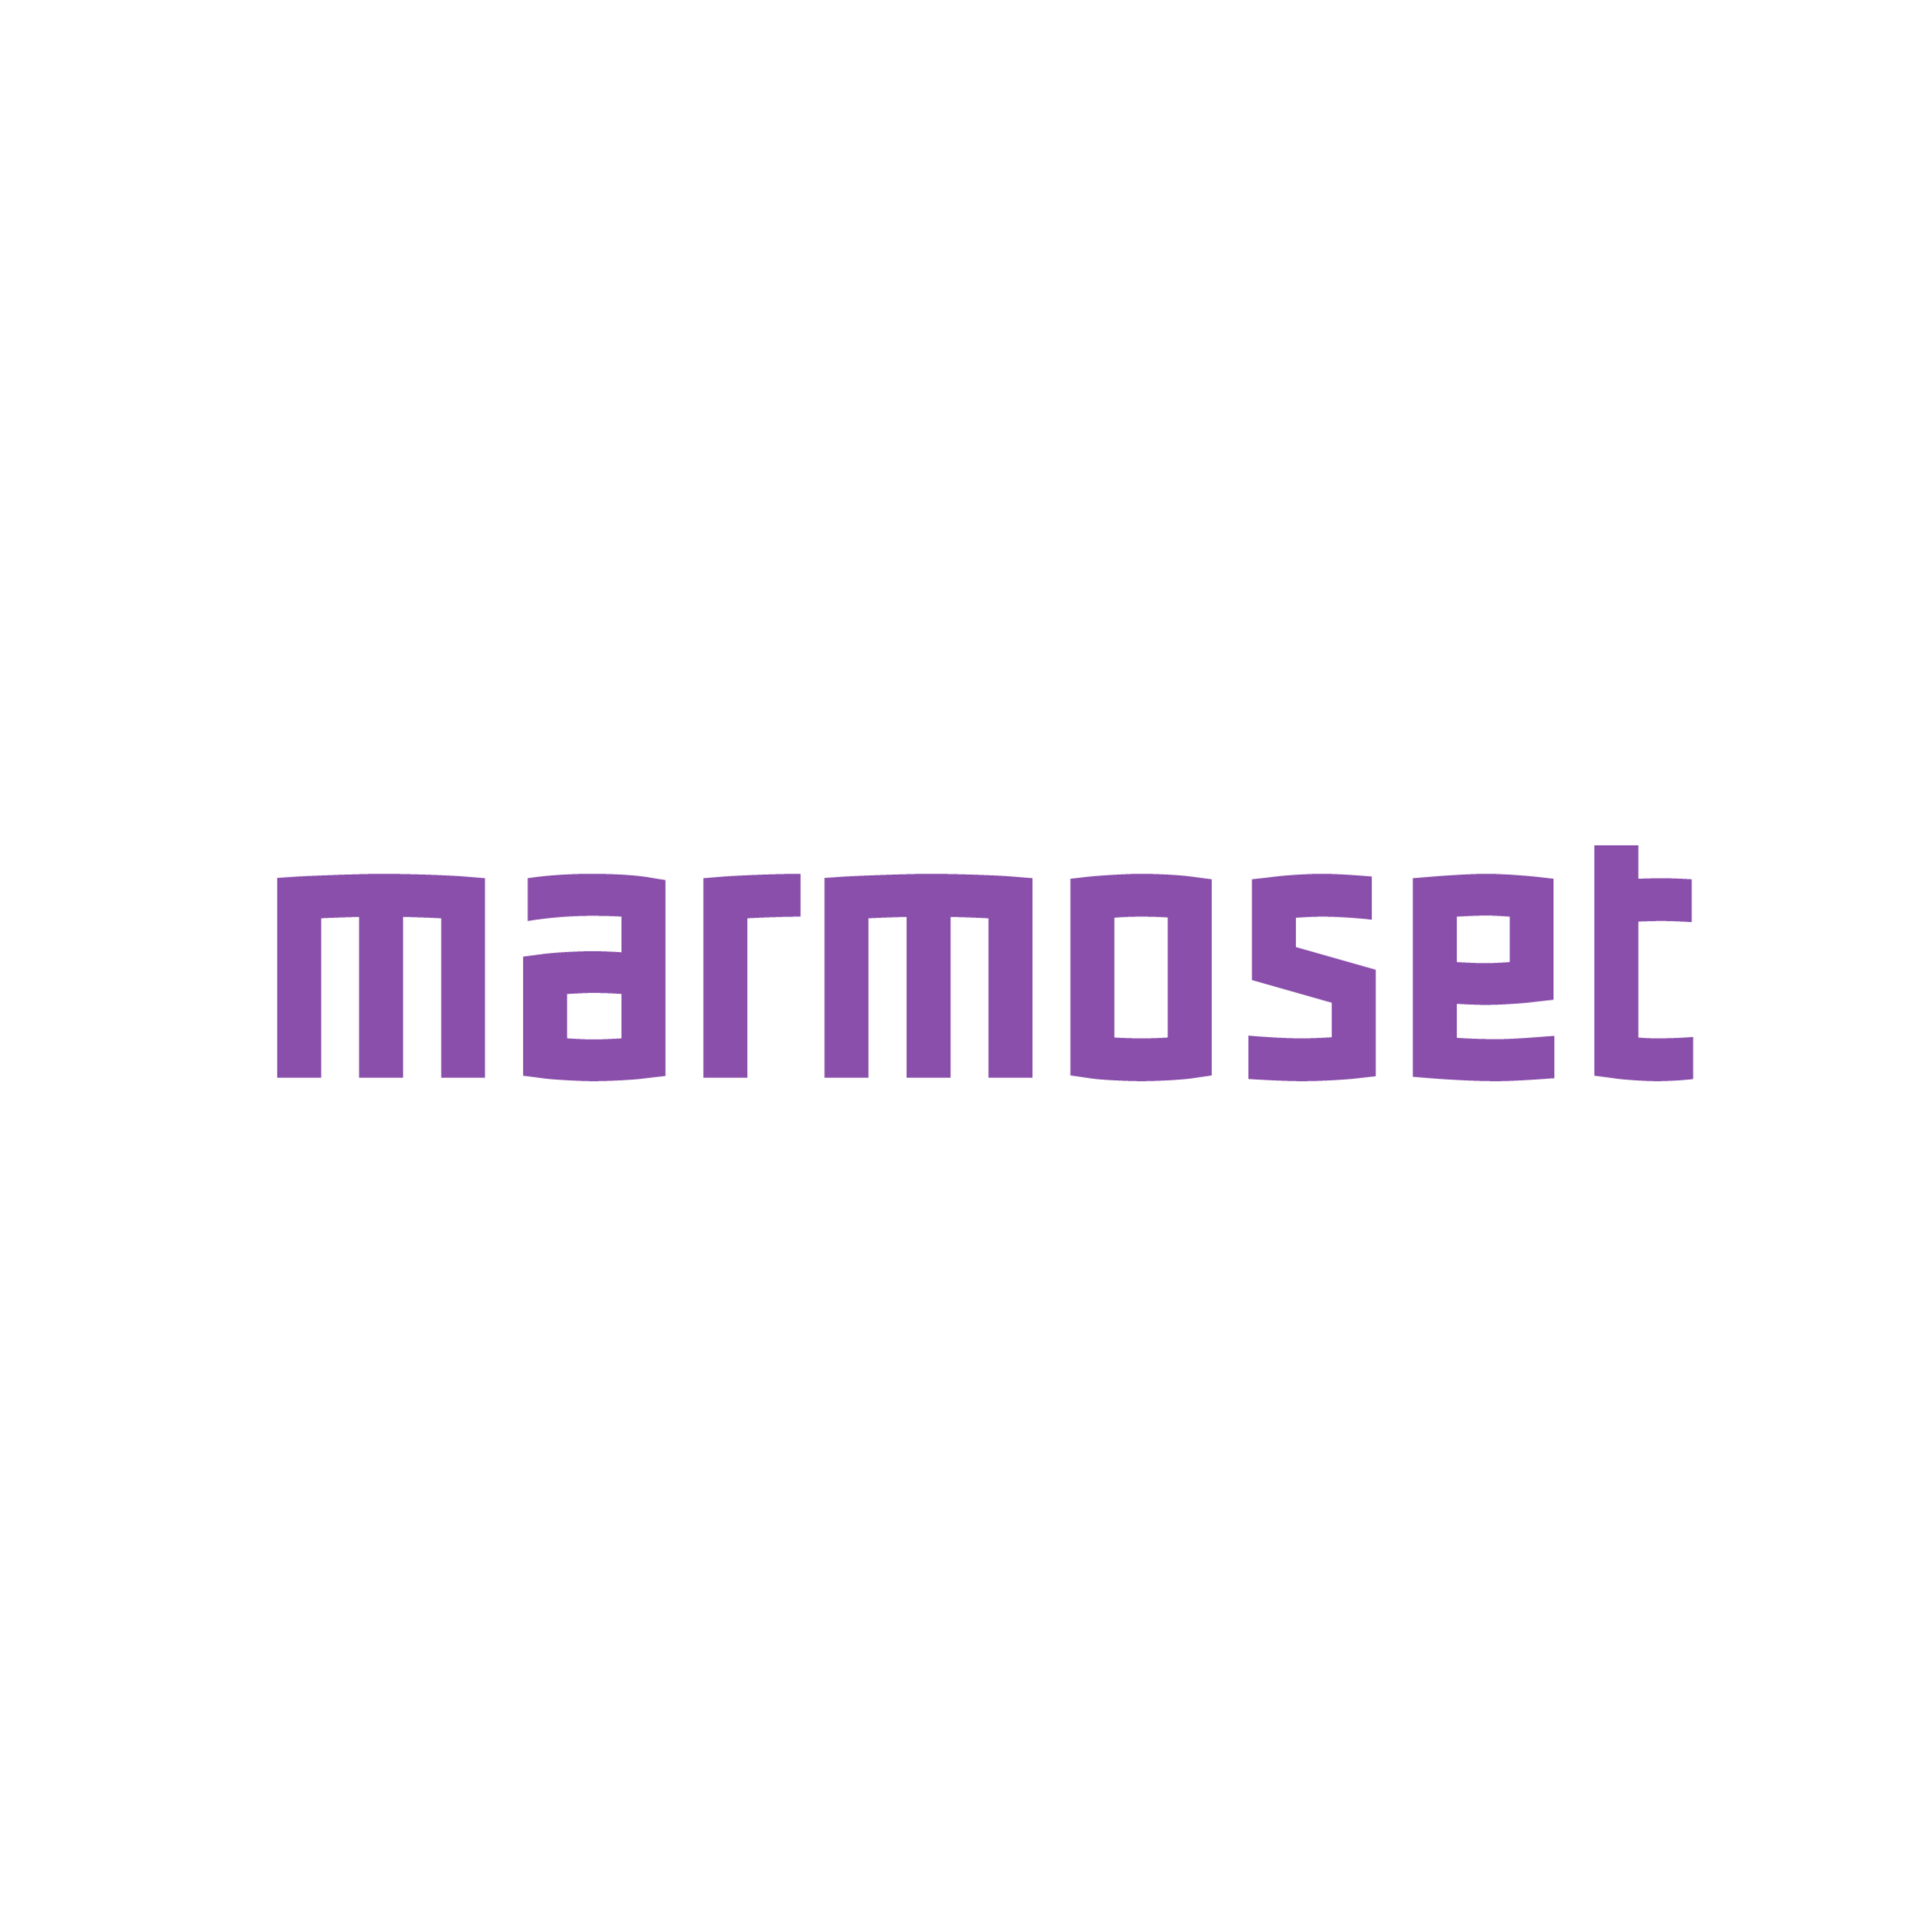 MarmosetMusic-1 copy.png